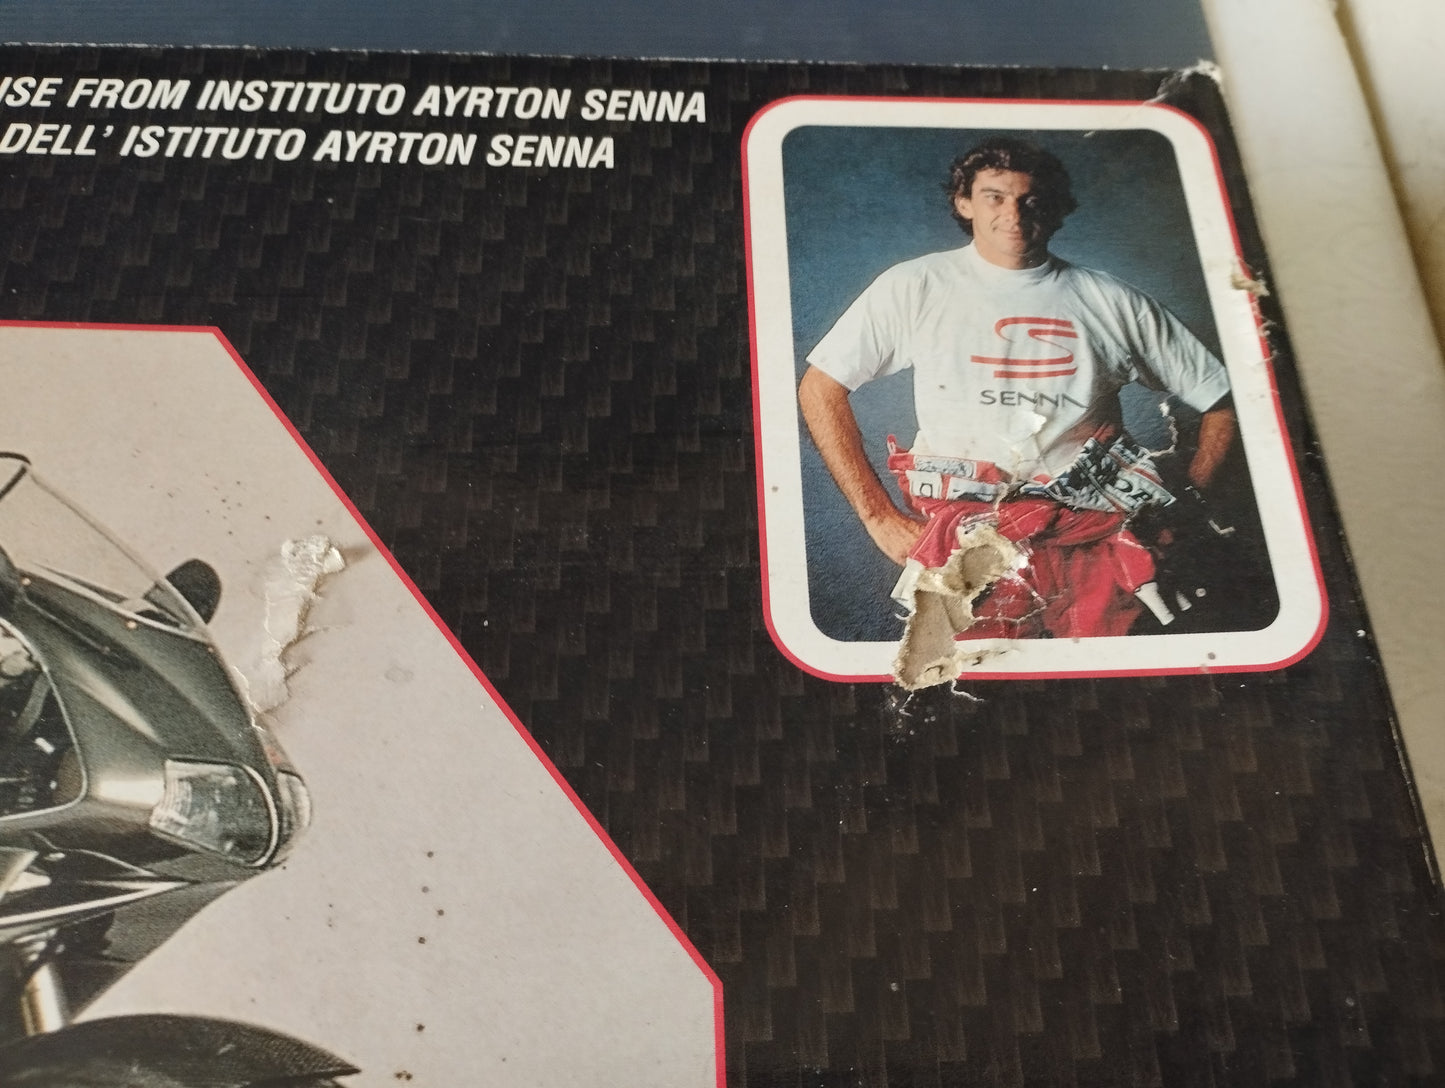 Ducati Senna Desmoquattro Novesedici model

 mounting kit Produced by Swift Protar Model

 Scale 1:9